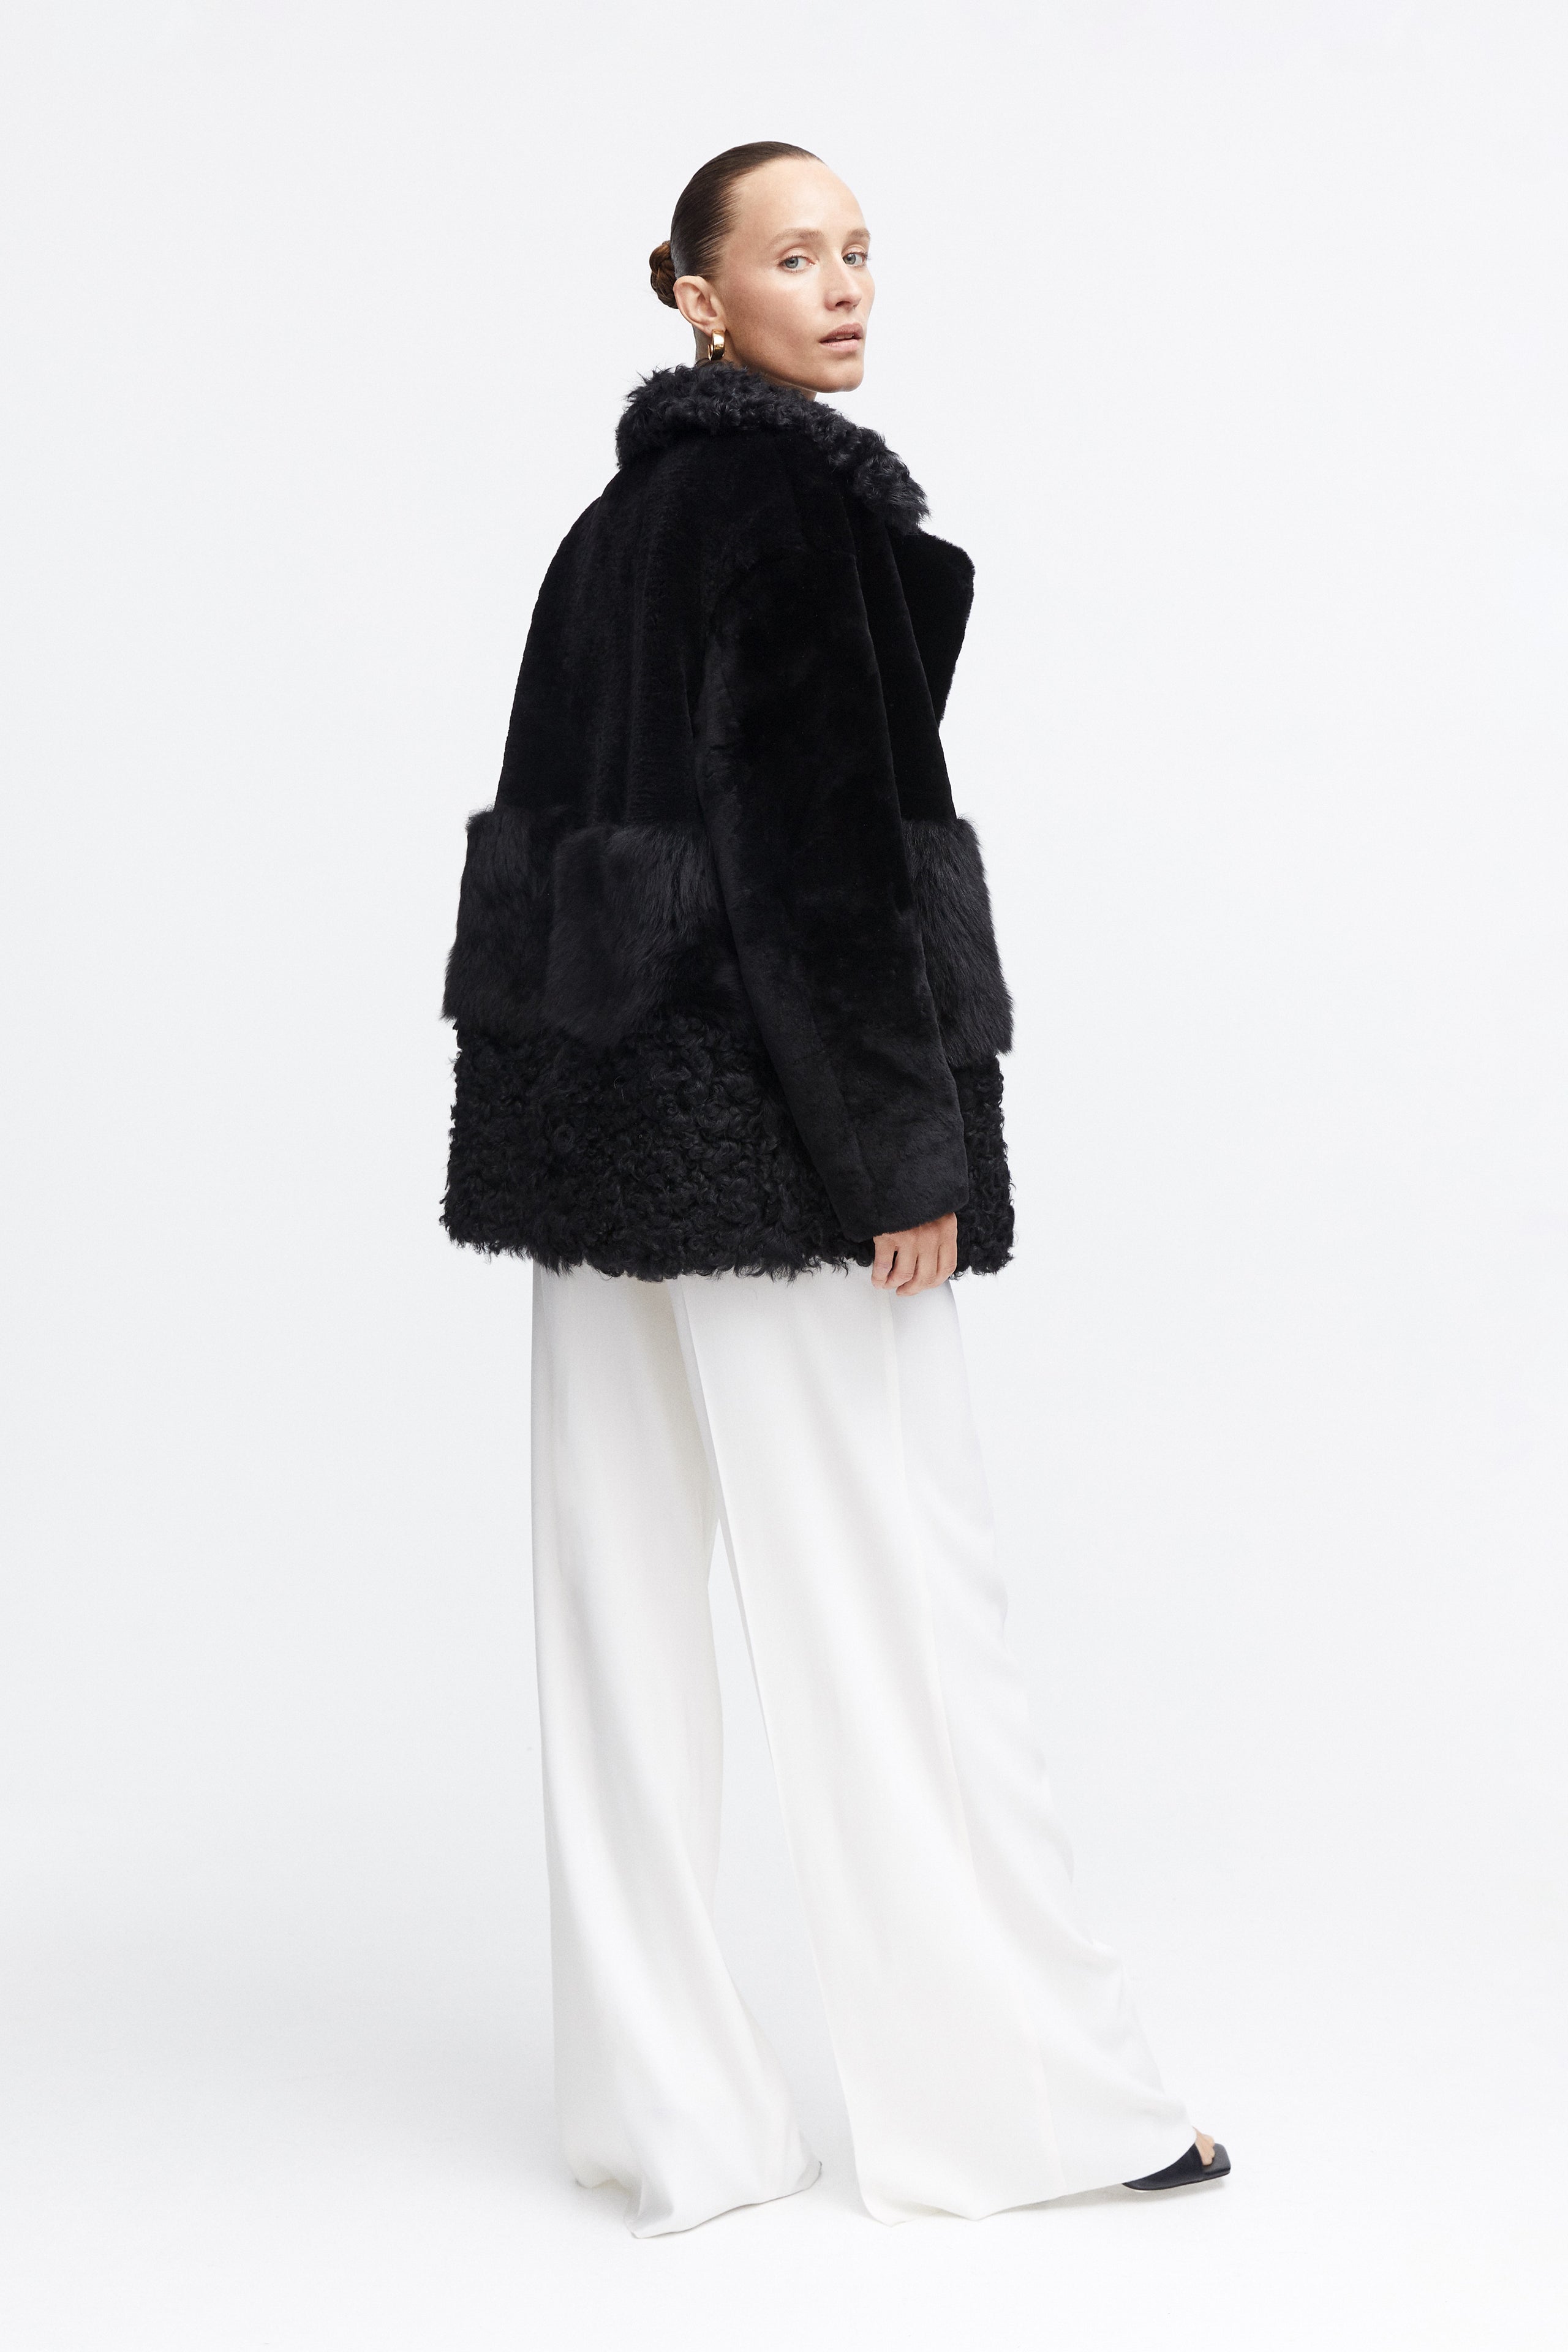 Model is wearing the Anouk Black Luxurious Shearling Coat Side